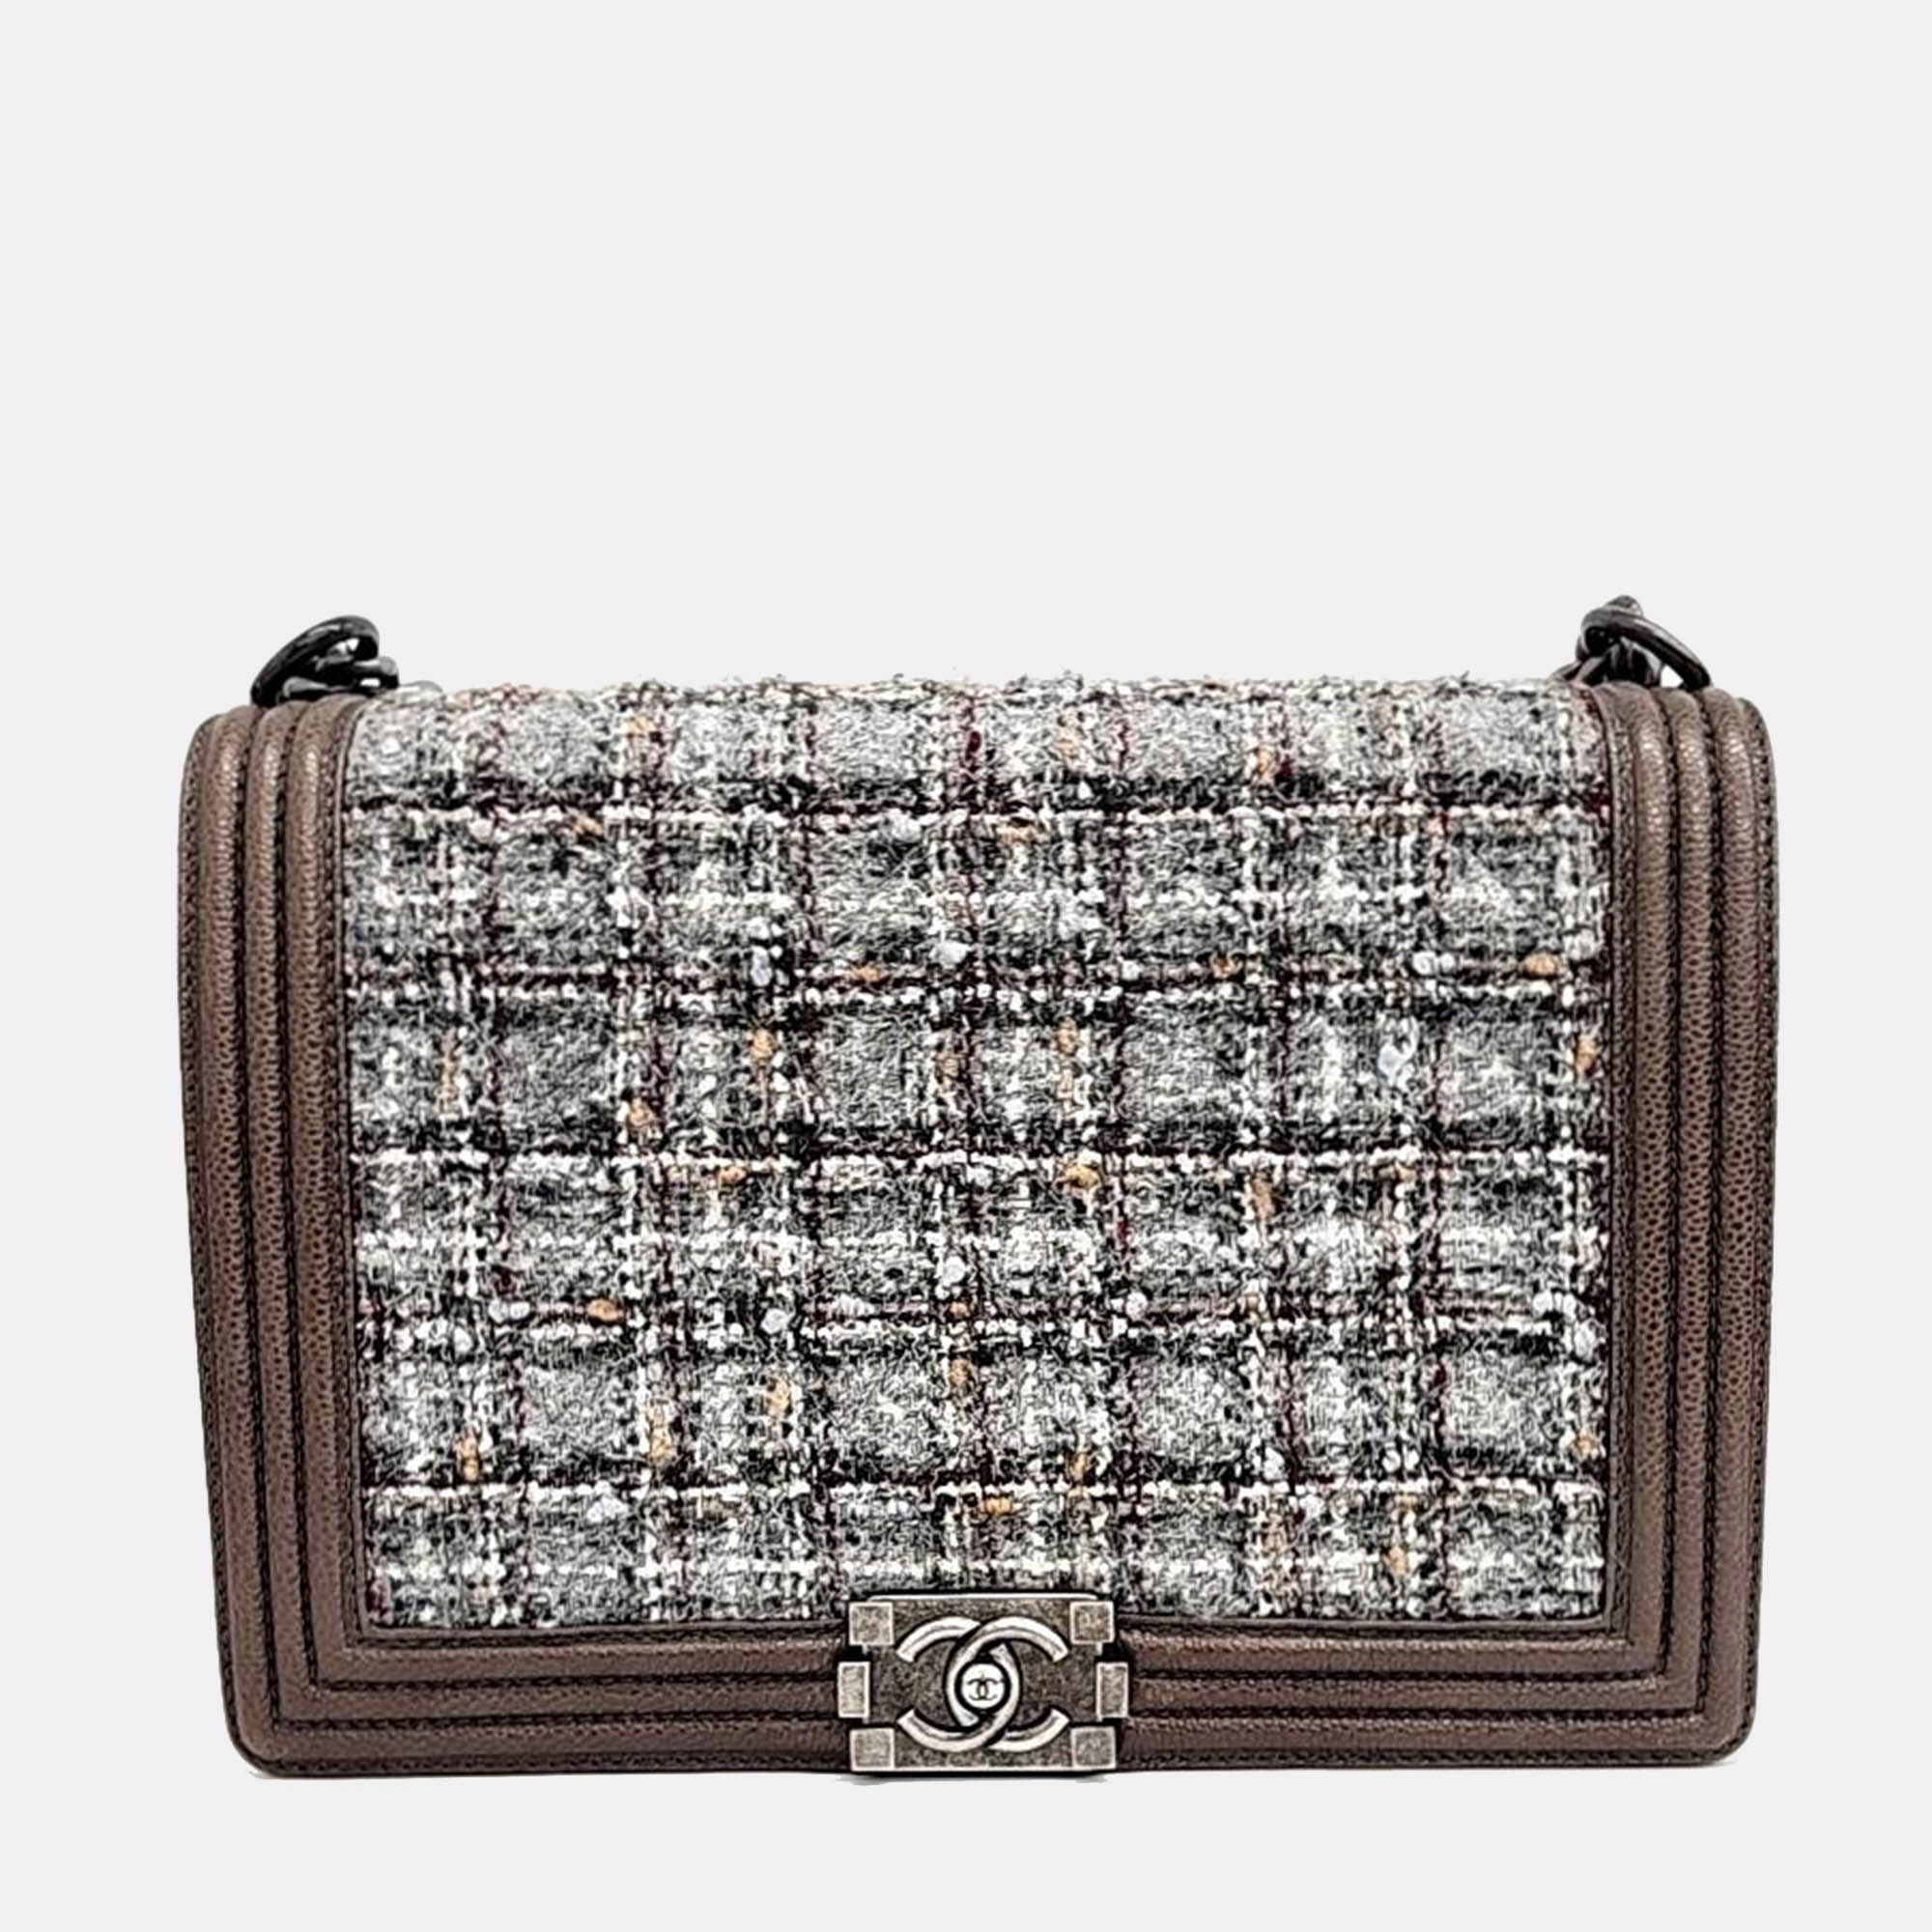 Chanel brown tweed and lambskin paris-edinburgh large boy bag